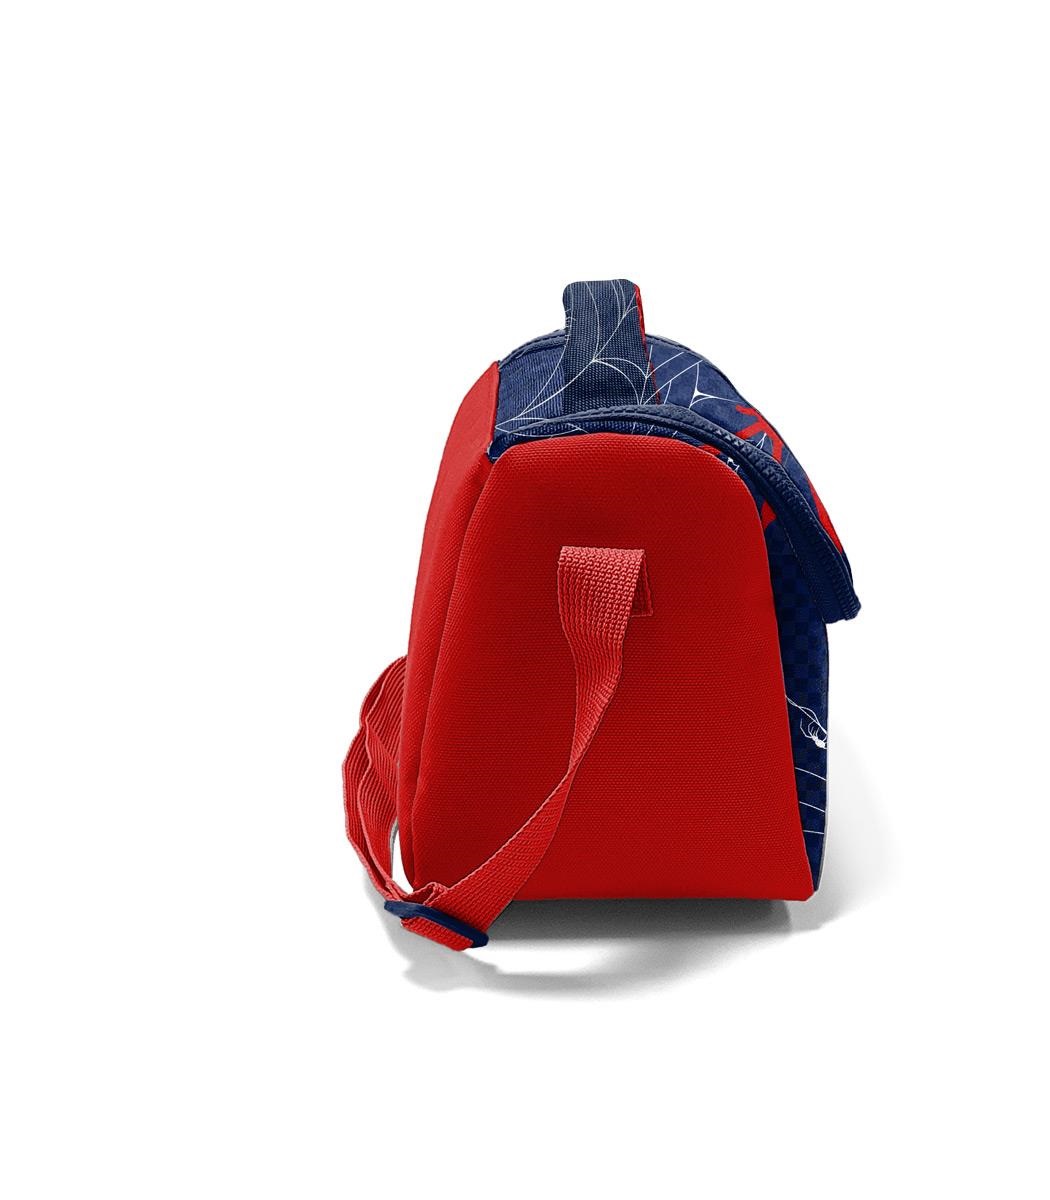 Coral High Kids Thermal Lunch Bag - Dark Blue Red Spider Patterned